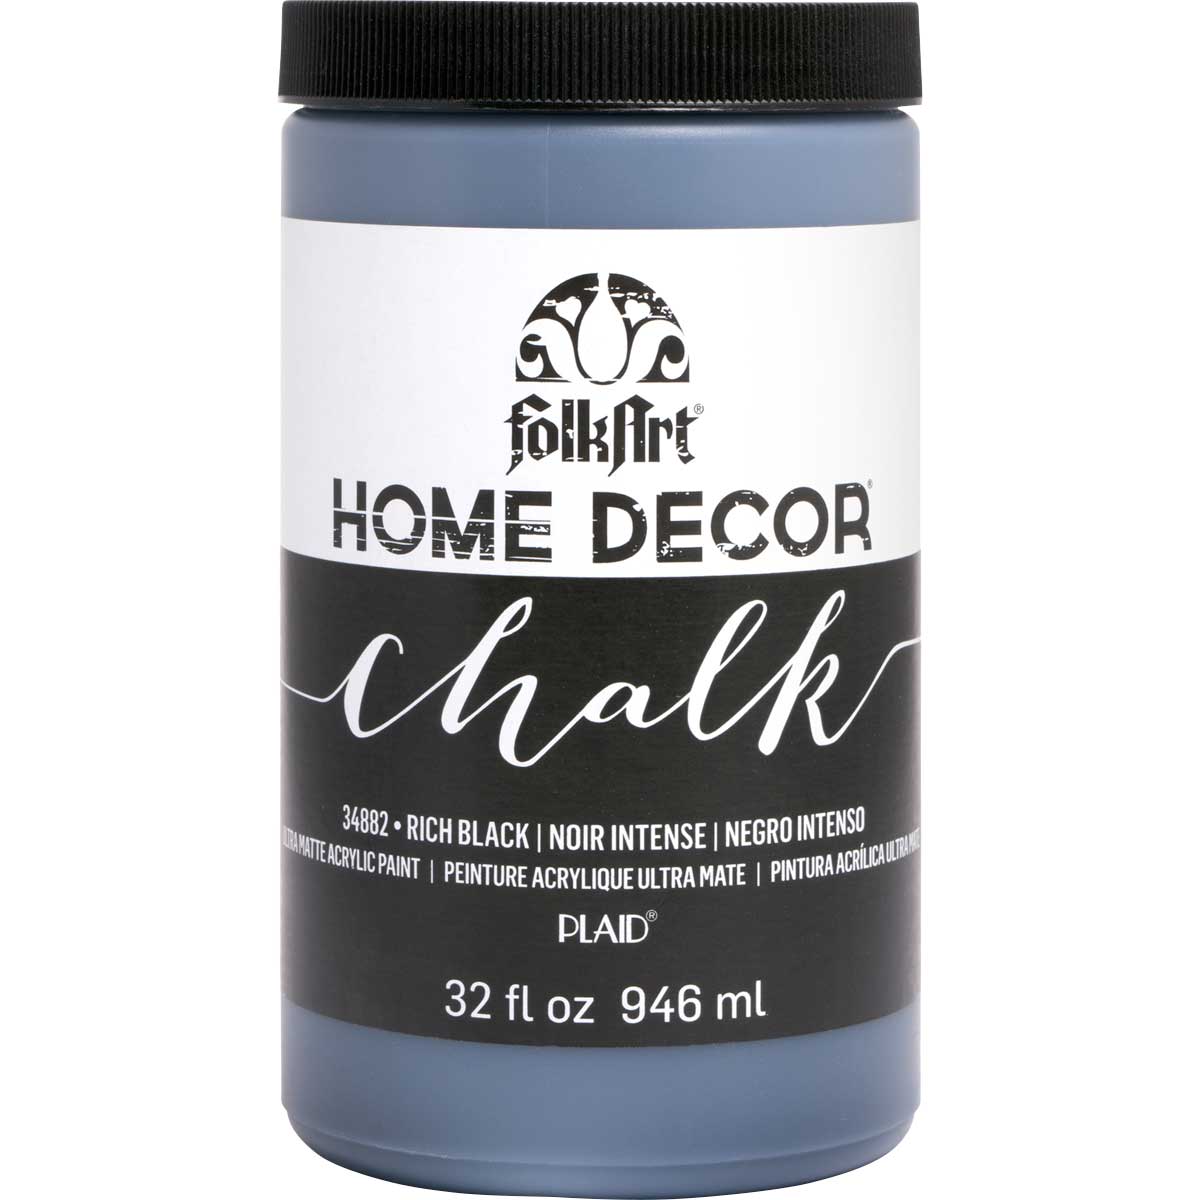 FolkArt ® Home Decor™ Chalk - Rich Black, 32 oz. - 34882